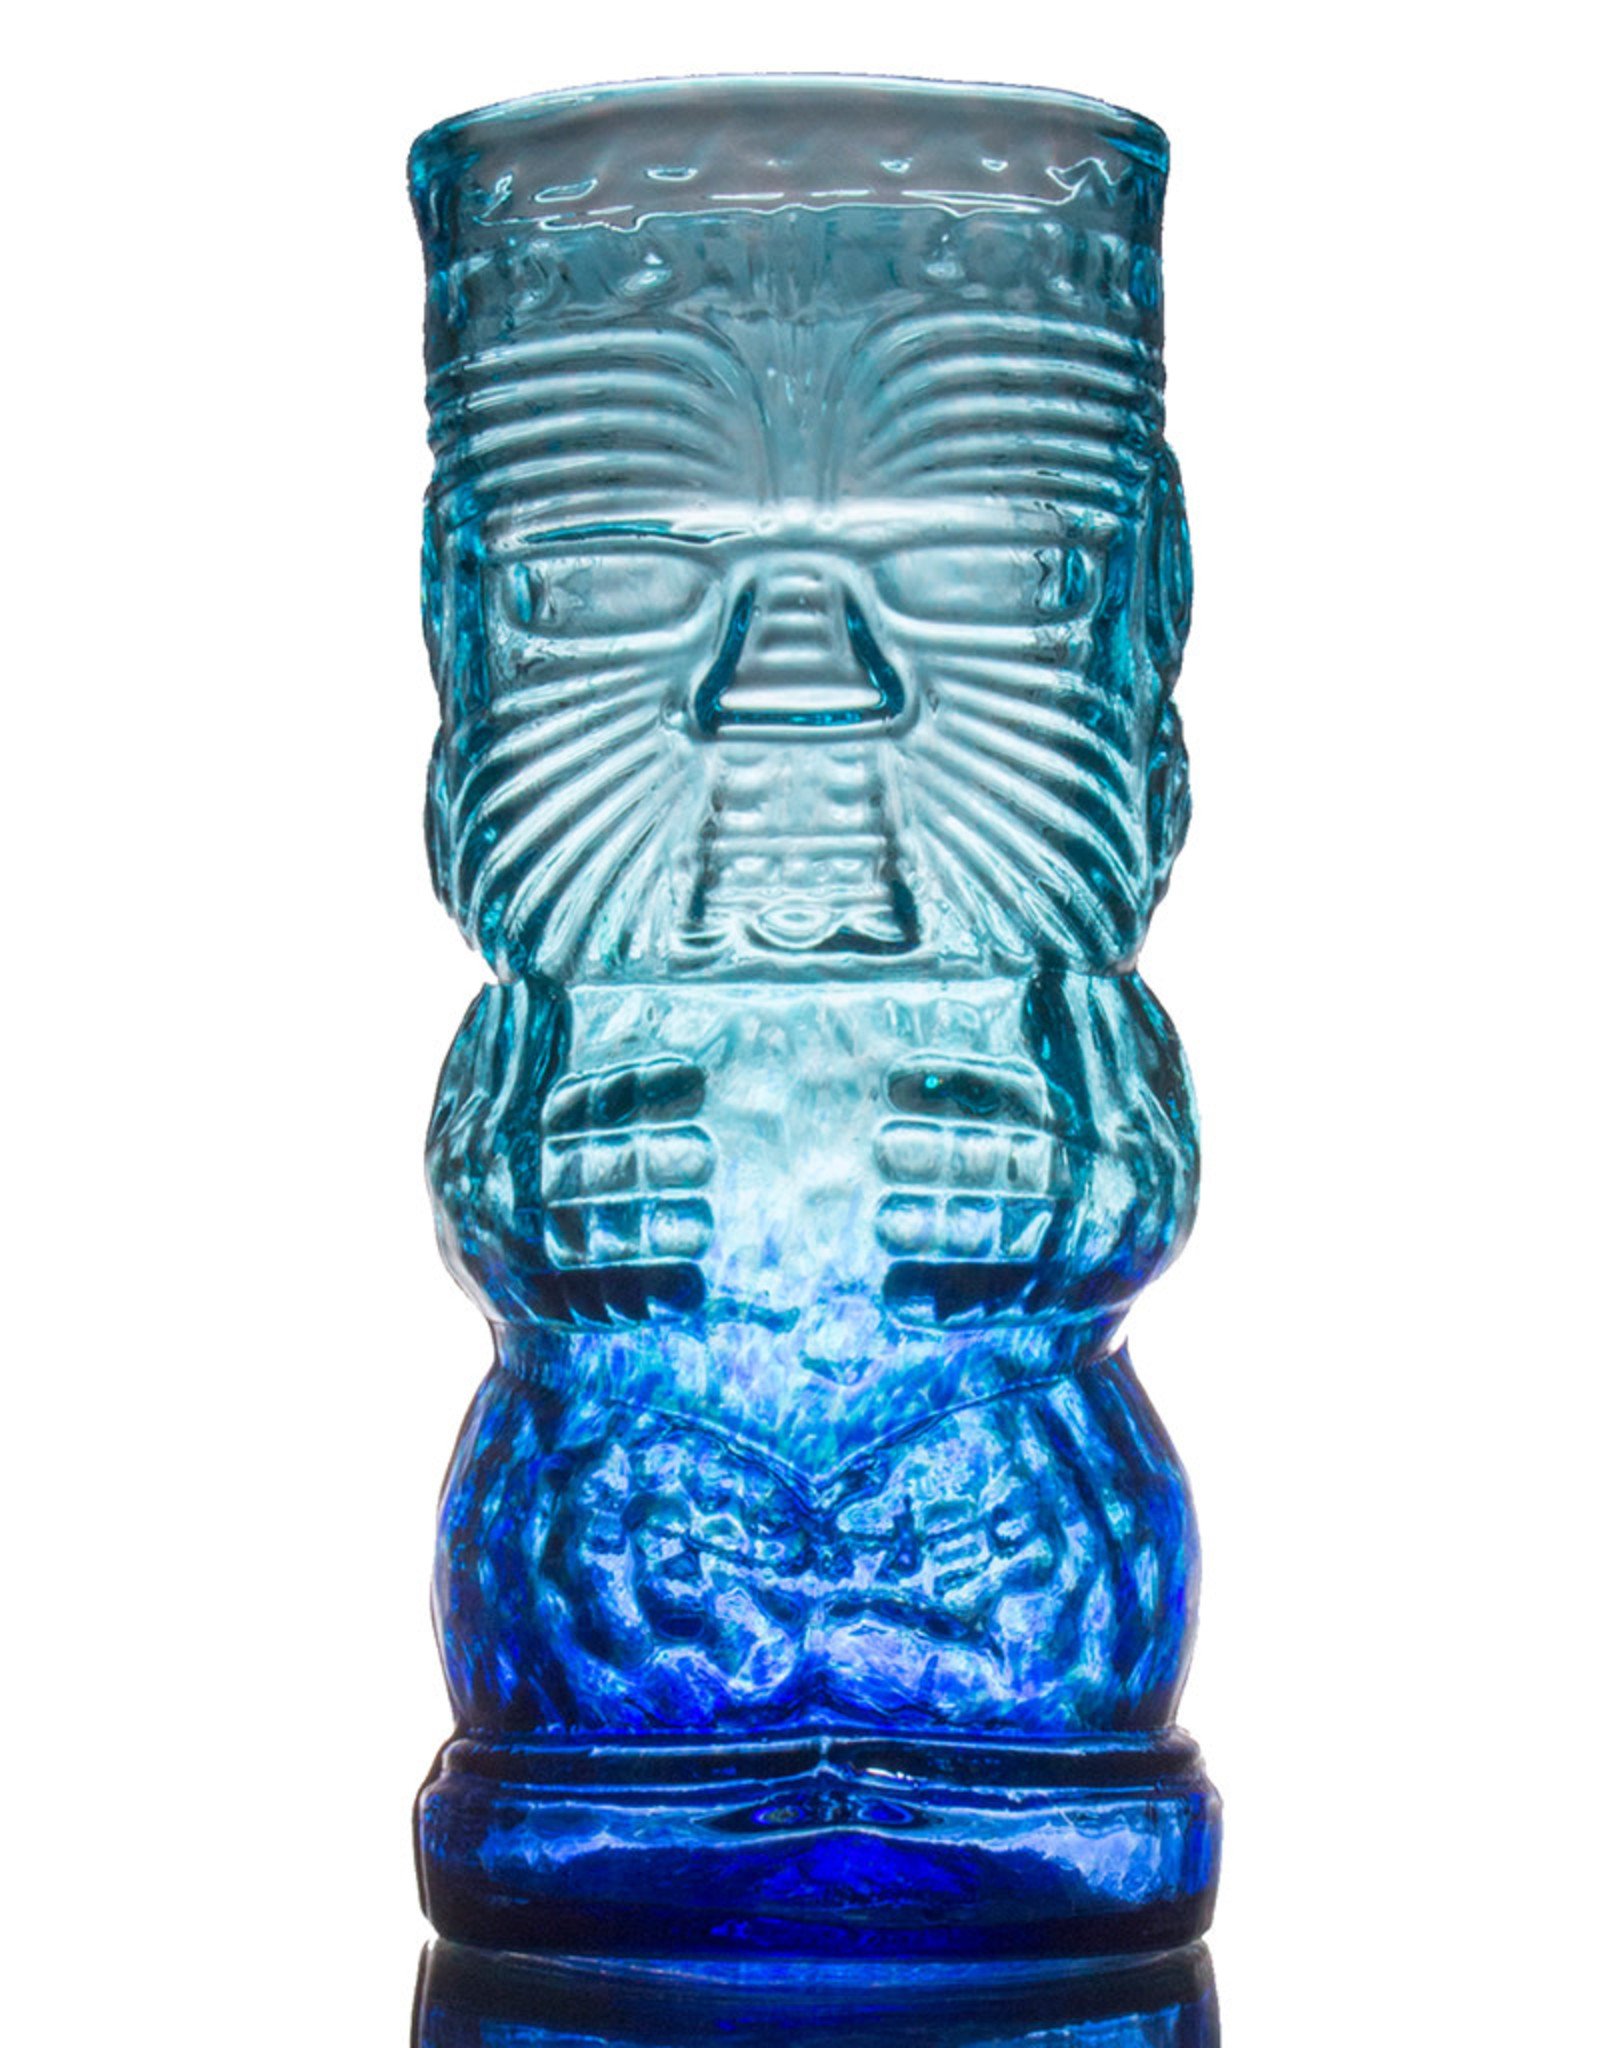 IANNAZZI GLASS DESIGN WARRIOR BLUE LAGOON GLASS TIKI MUG